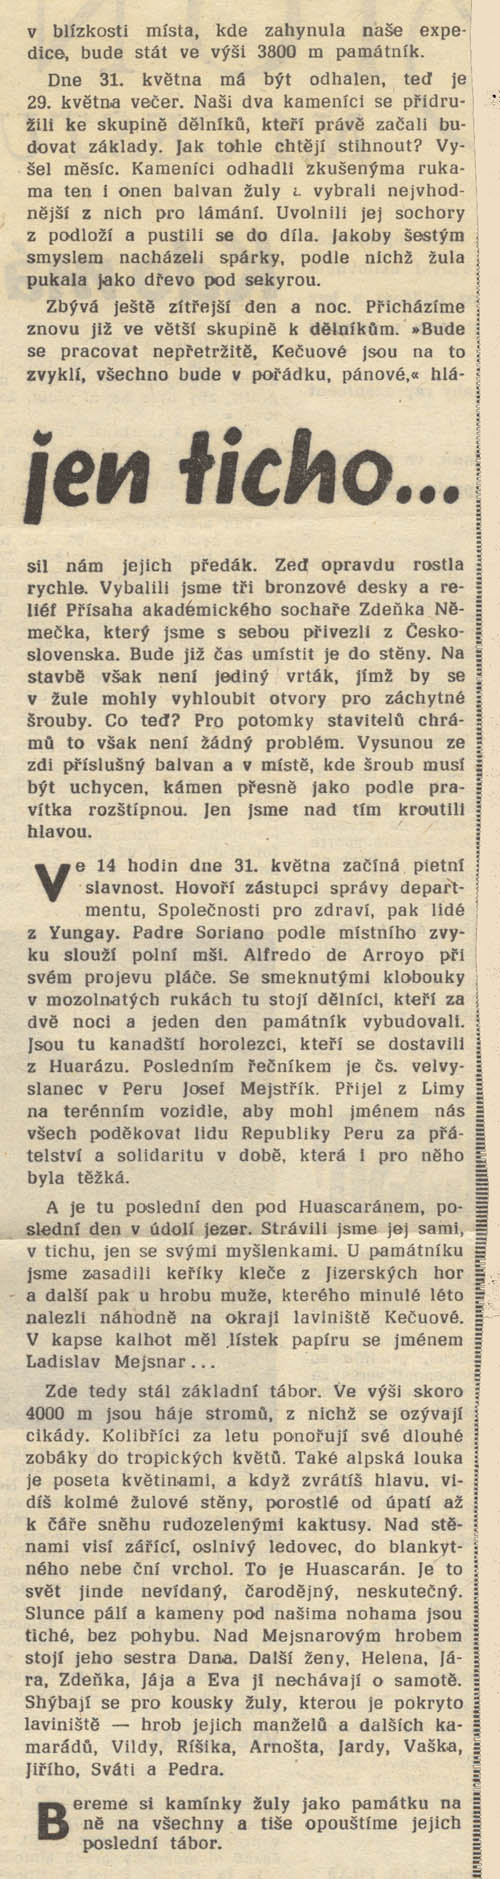 ČS sport 18. 8. 1972